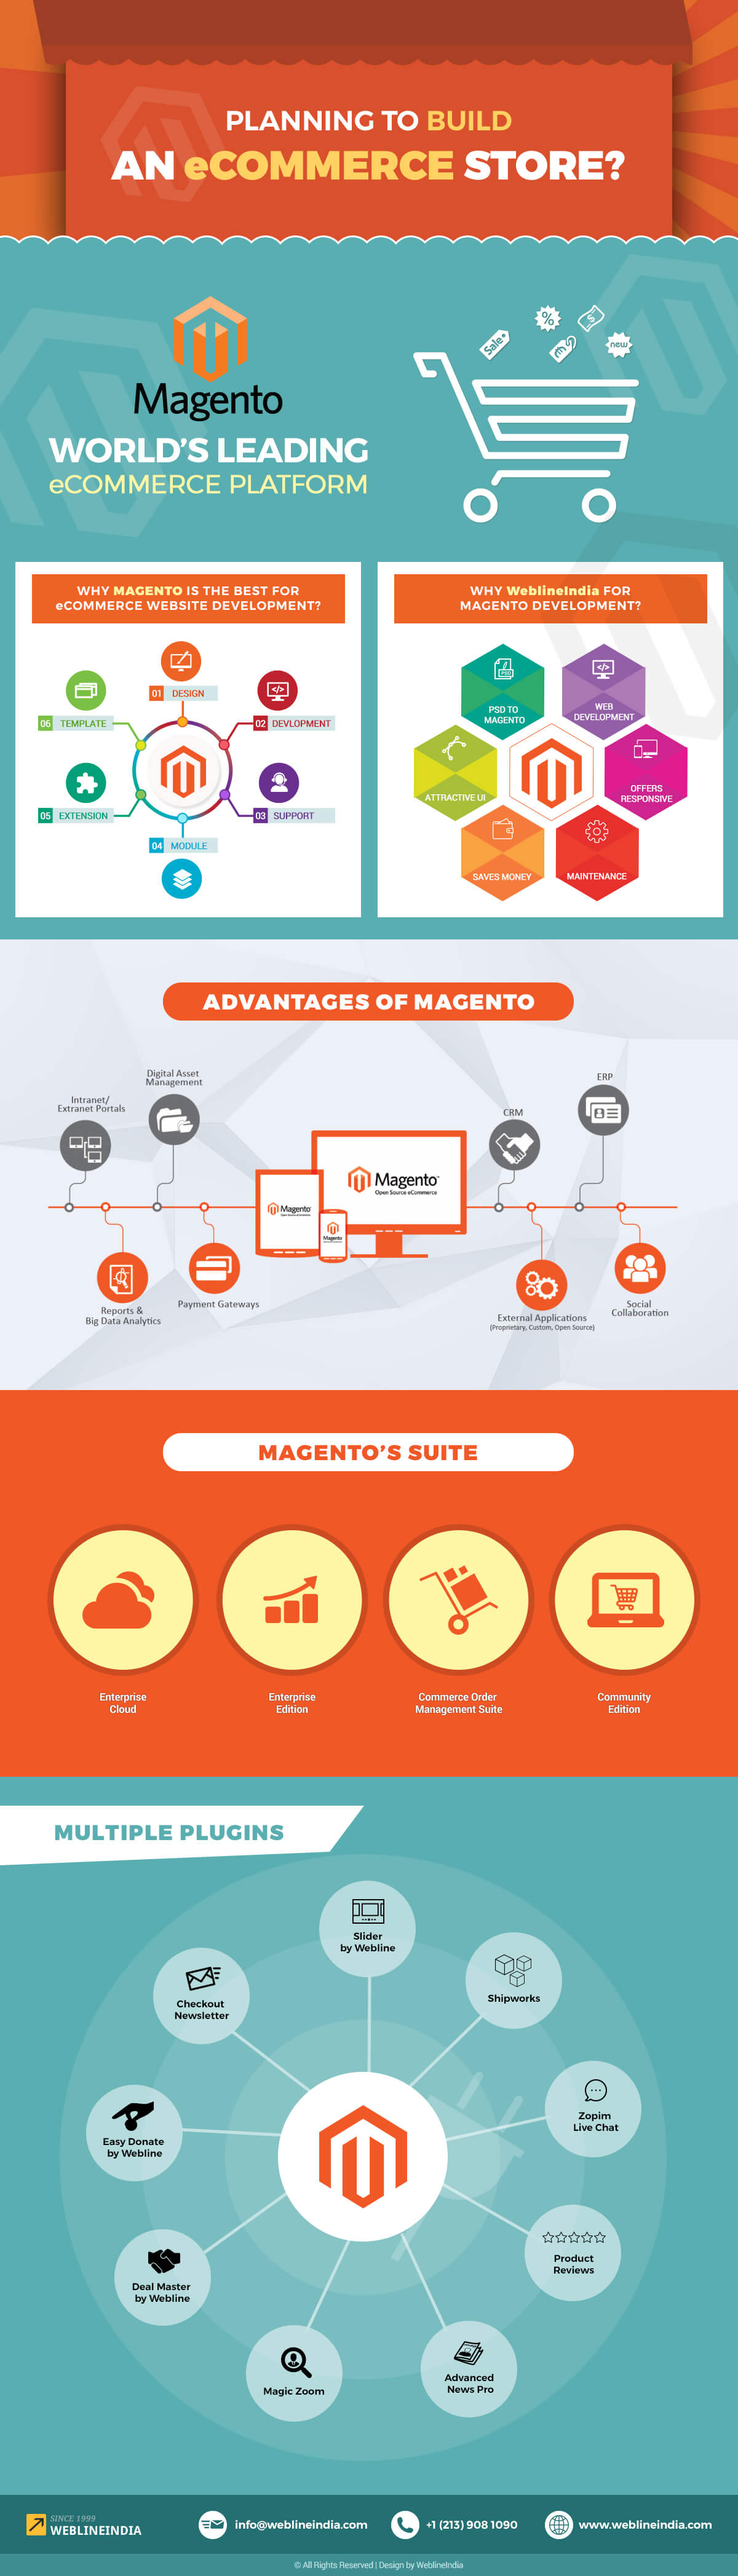 magento-infographic-by-weblineindia